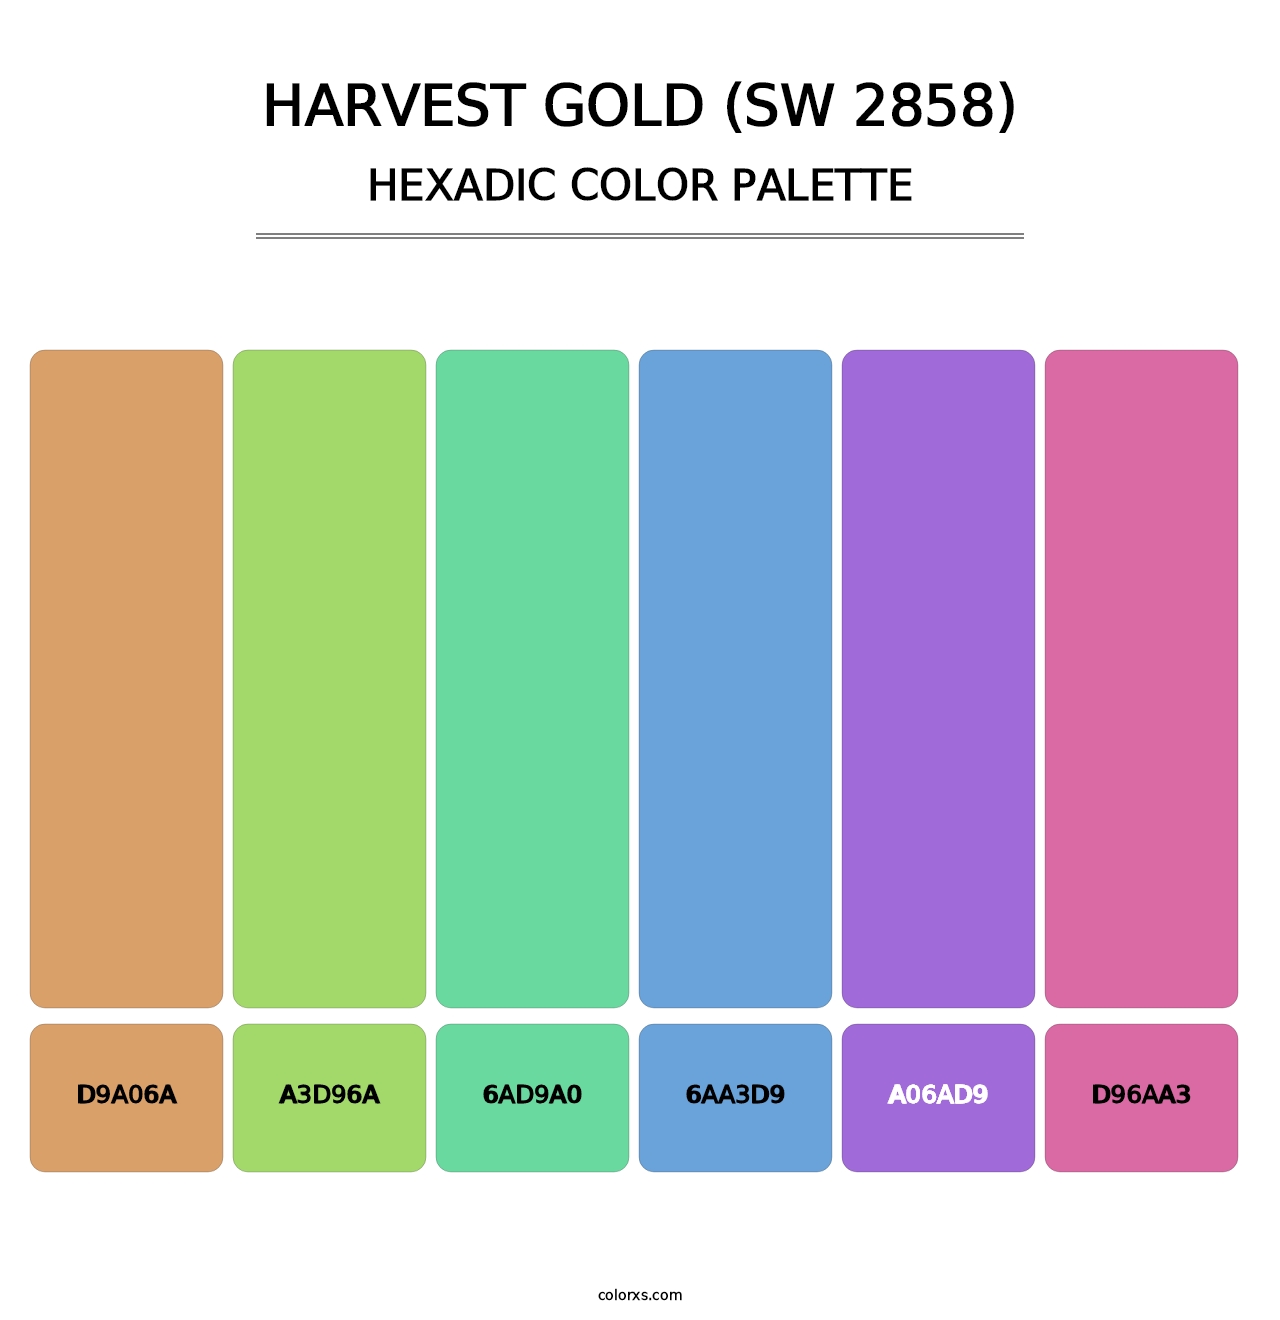 Harvest Gold (SW 2858) - Hexadic Color Palette